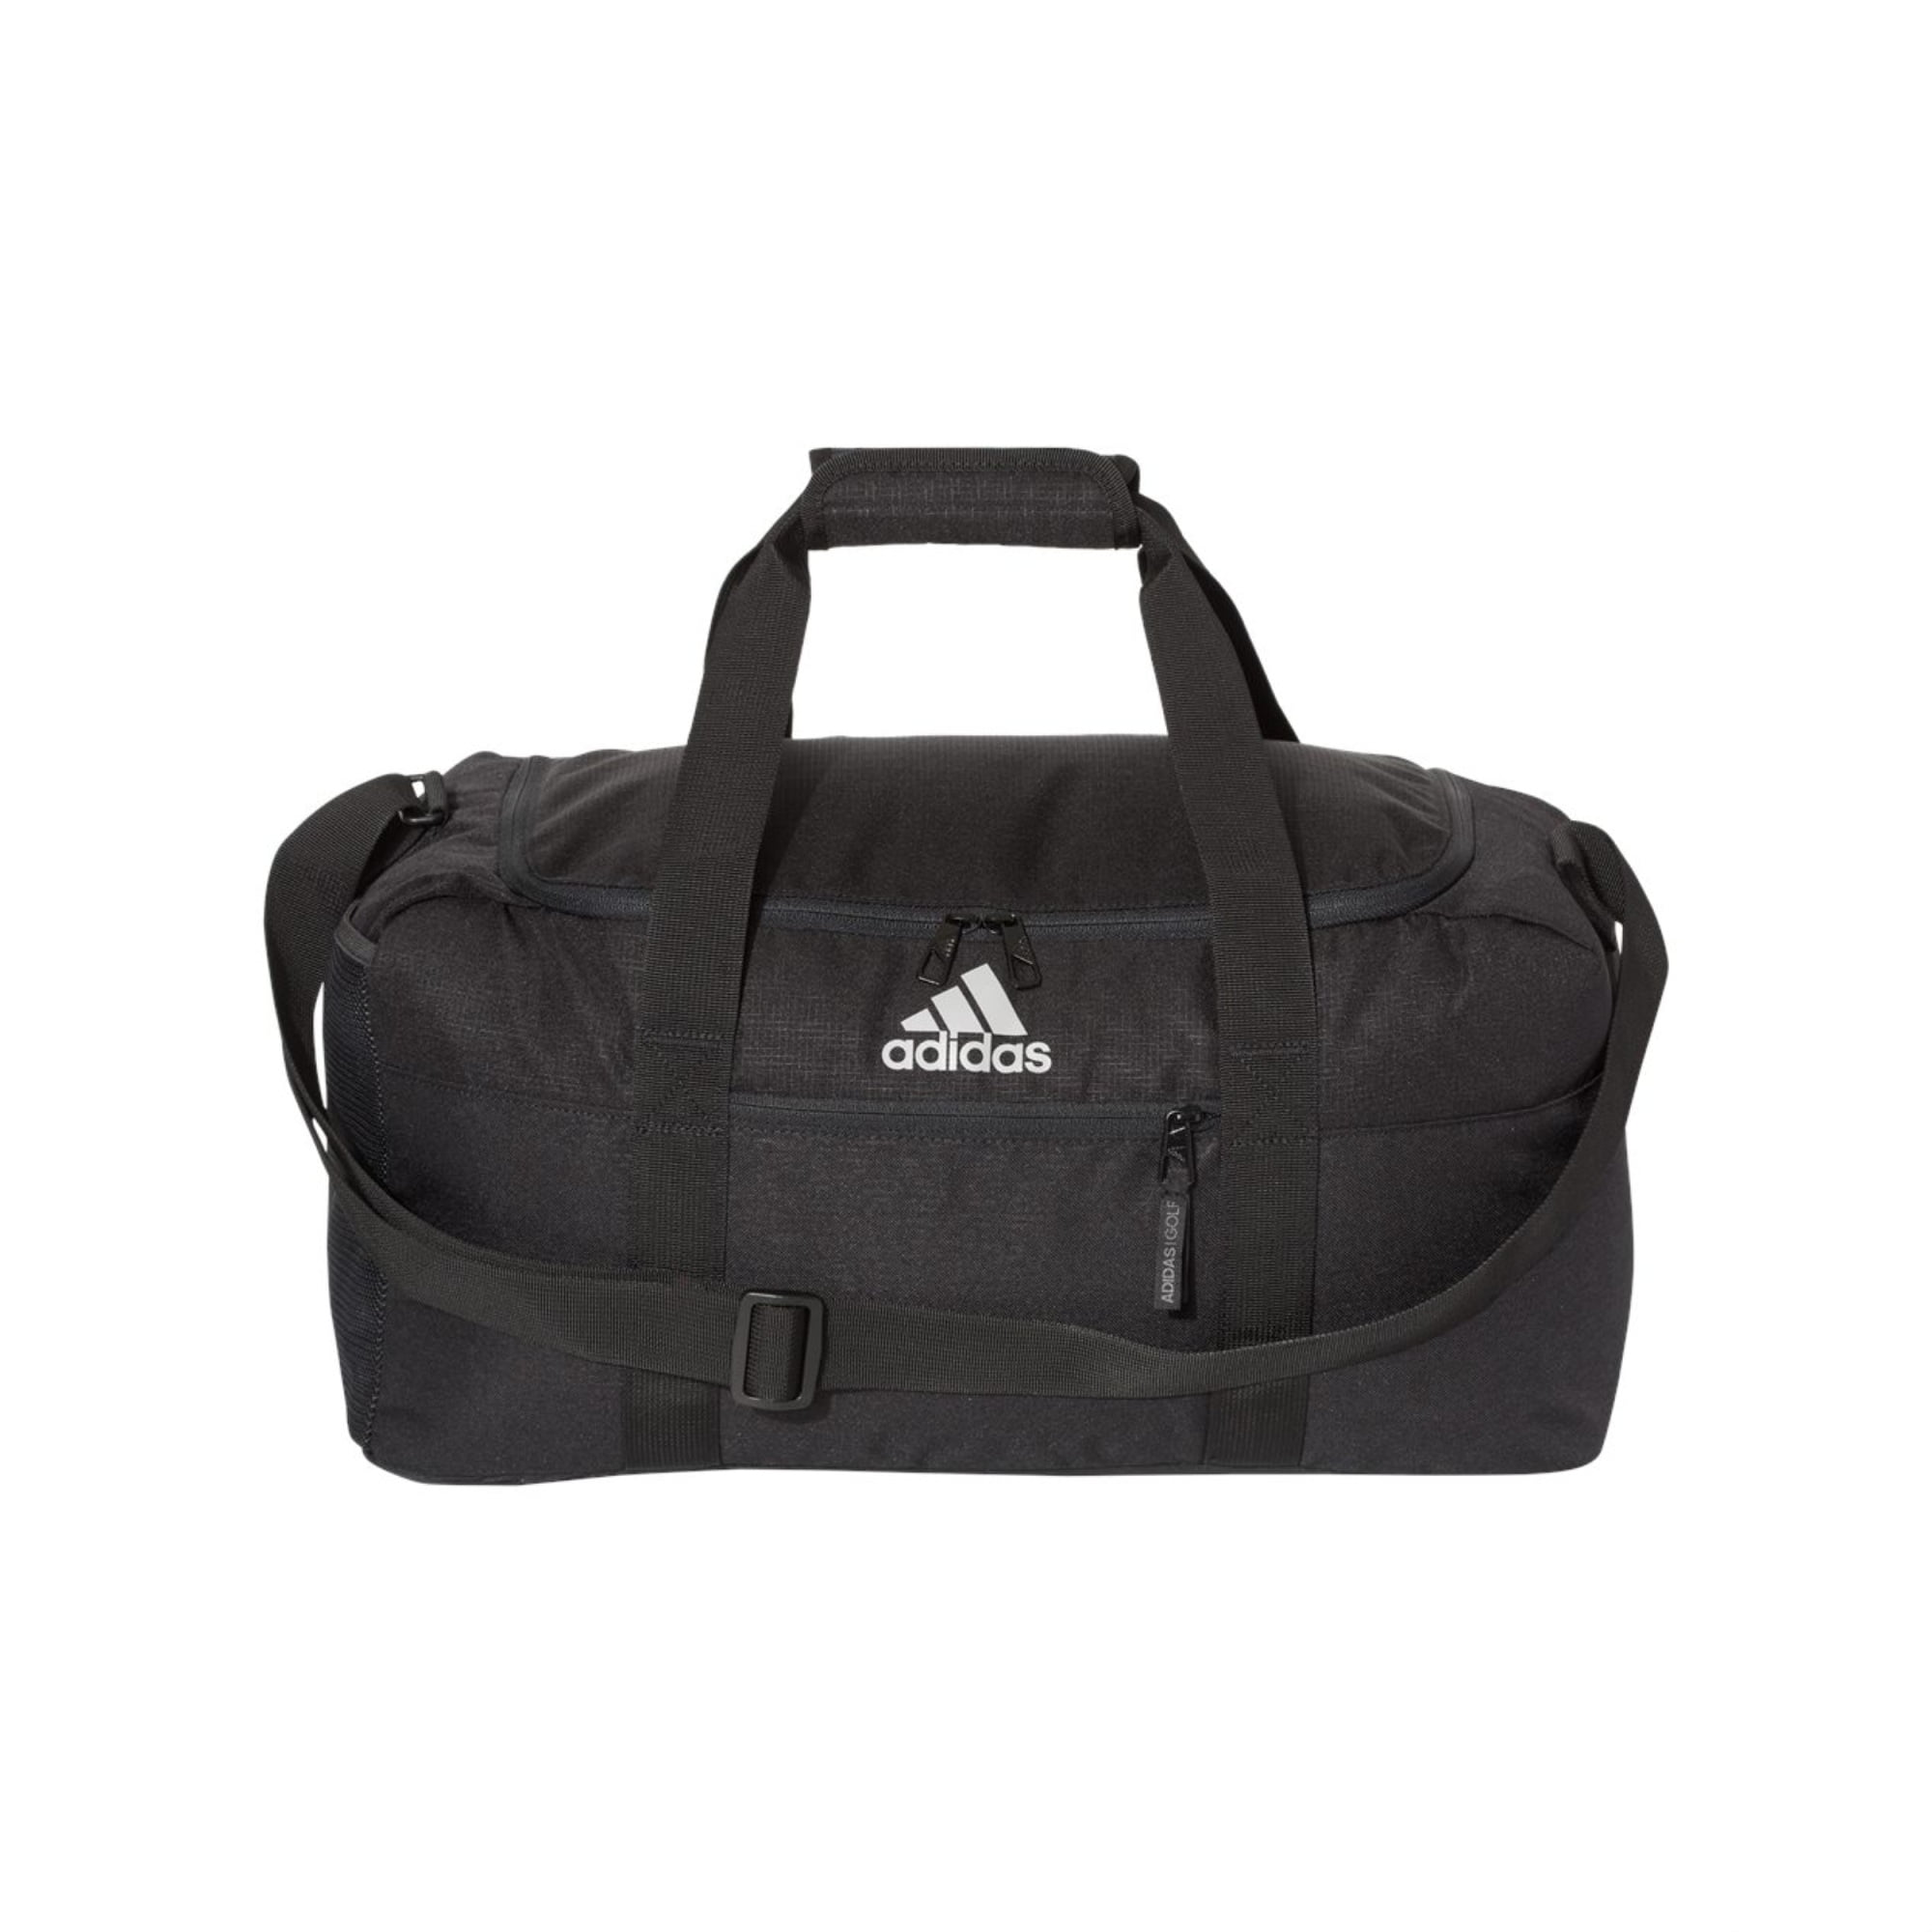 Adidas - 35L Weekend Duffel Bag - A311 - Collegiate Red/ Black - One Size - Walmart.com